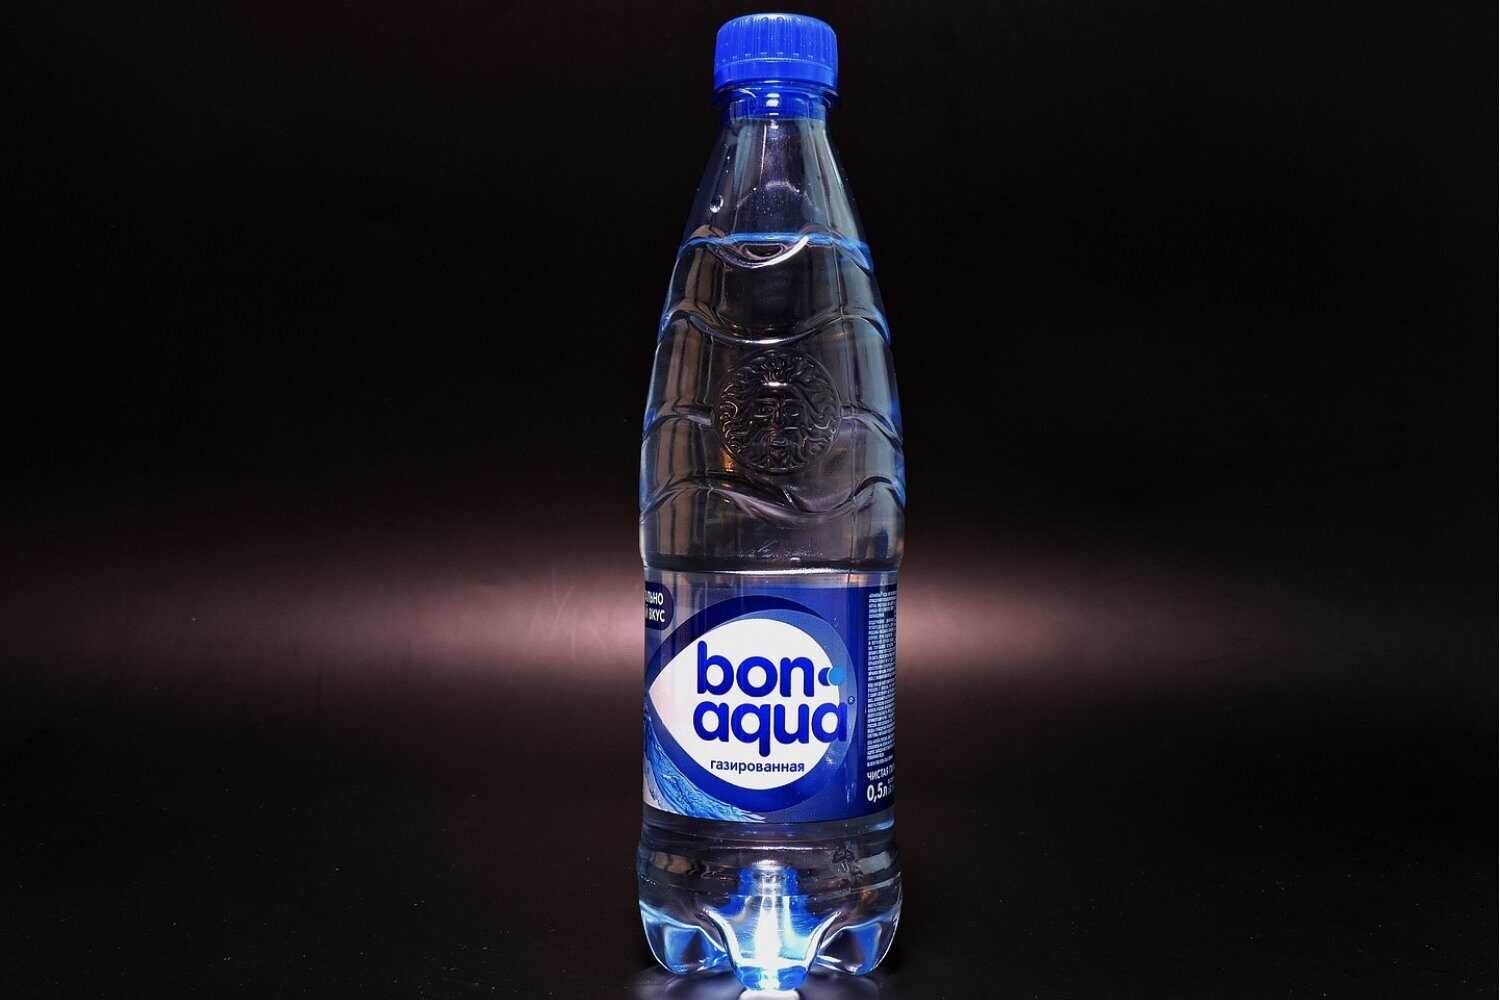 Bon-aqua - вода от мирового бренда | house-fitness.ru